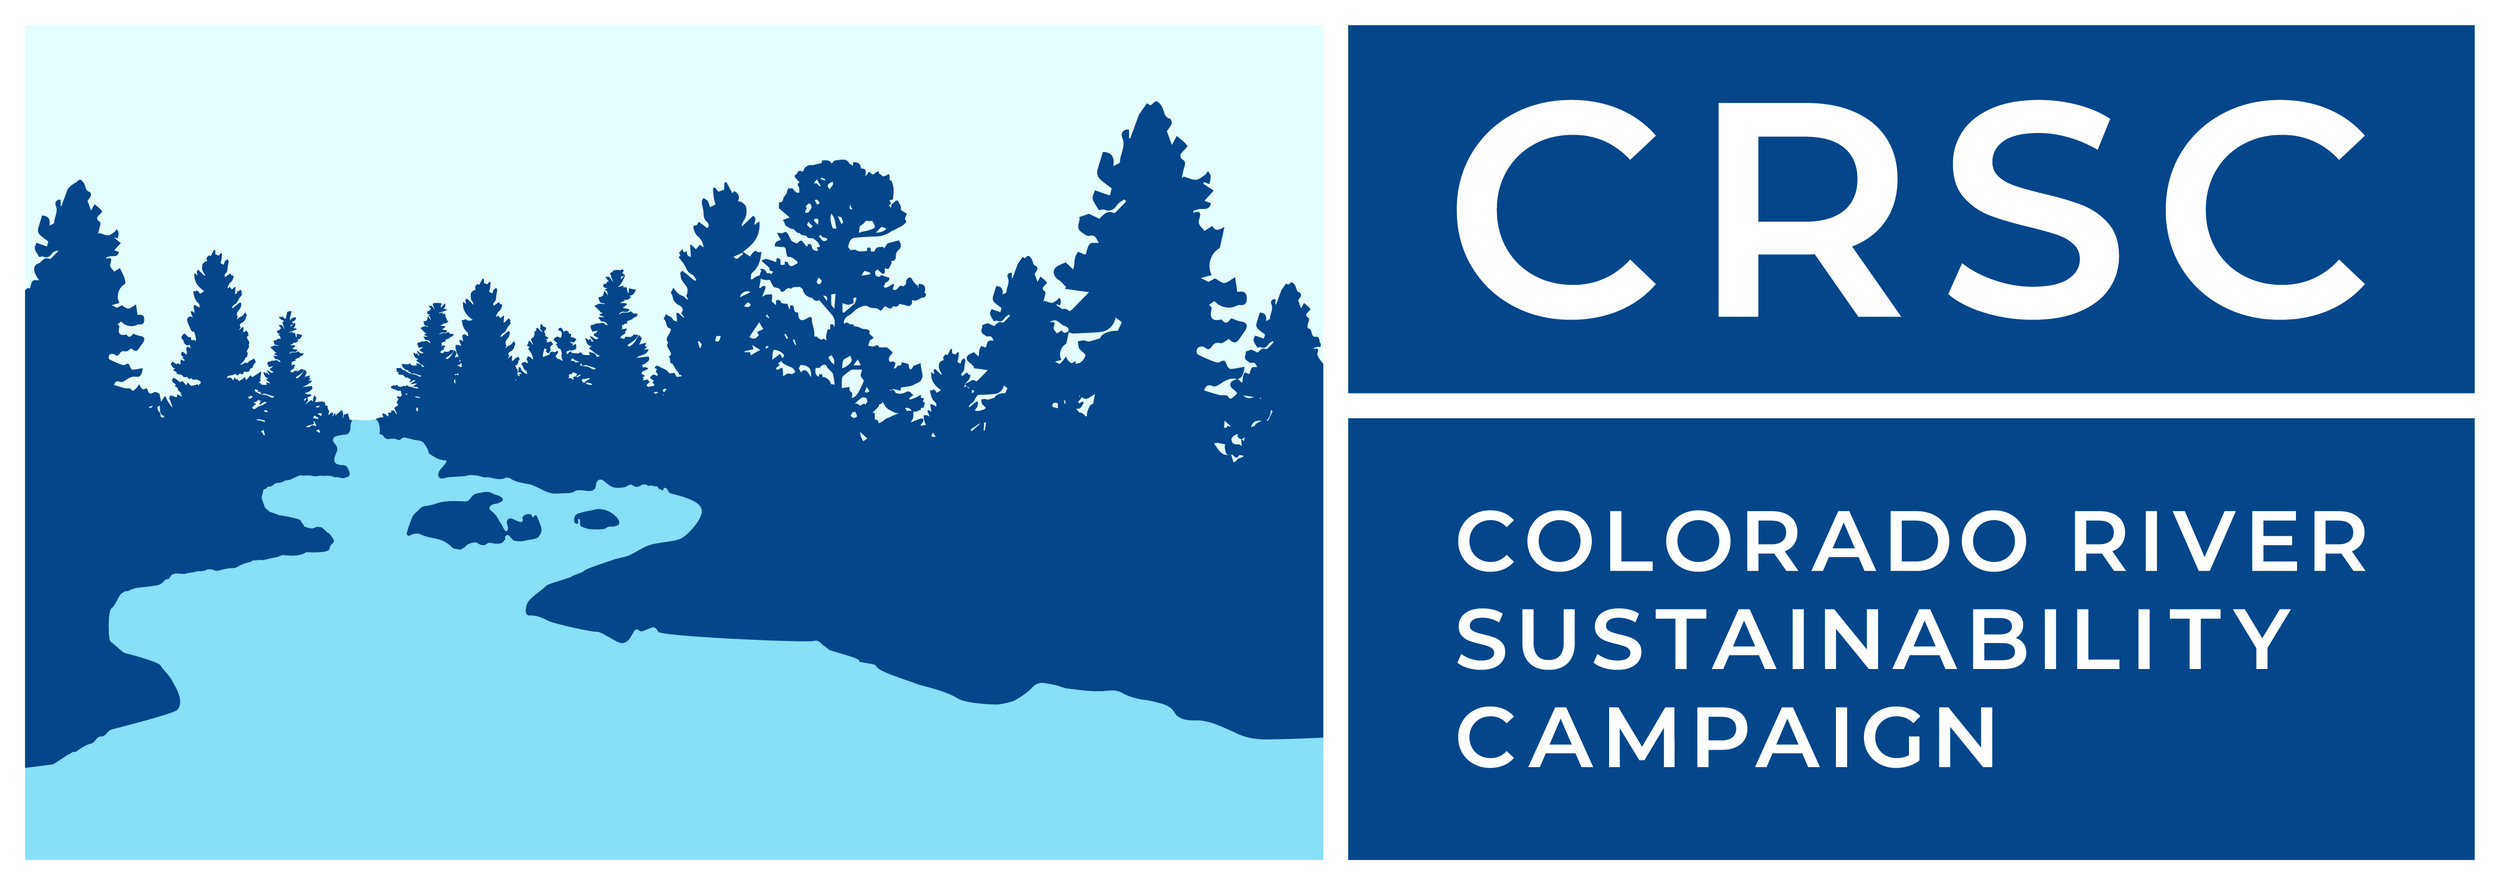 Colorado River Sustainability Campaign